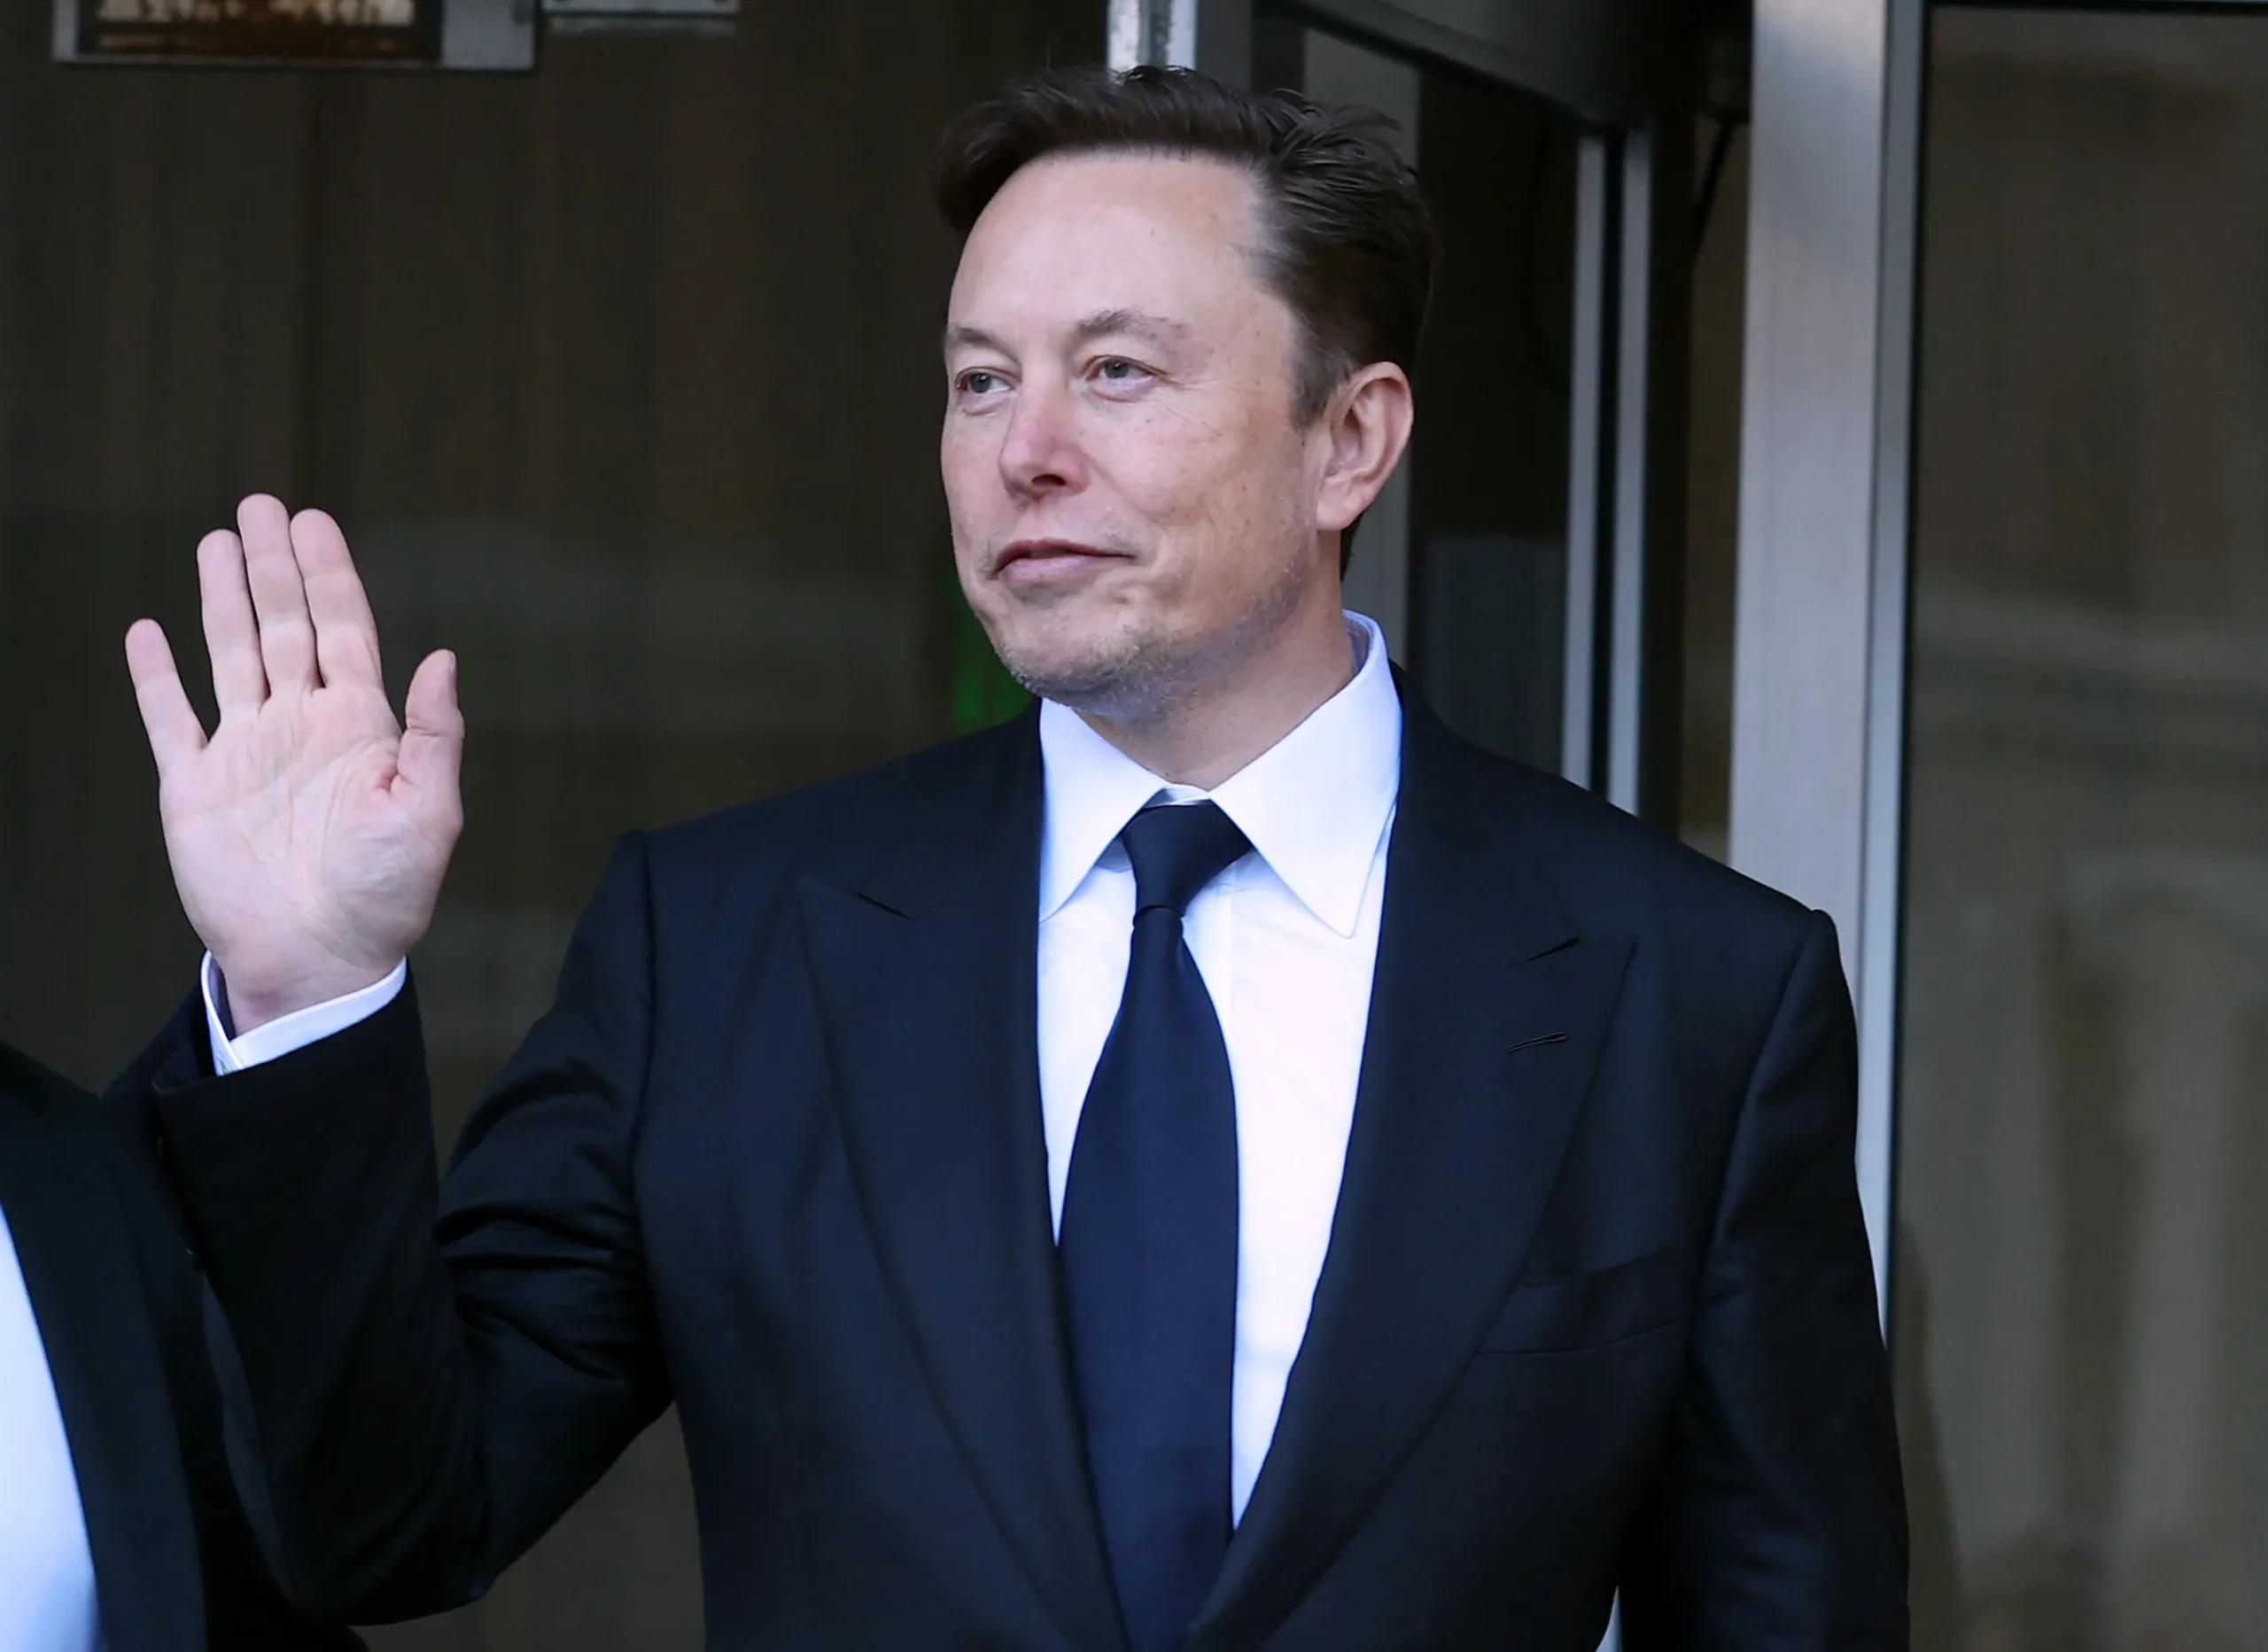 Tesla’s Elon Musk May Depart if $56 Billion Compensation Plan Fails, Board Chair Warns Shareholders